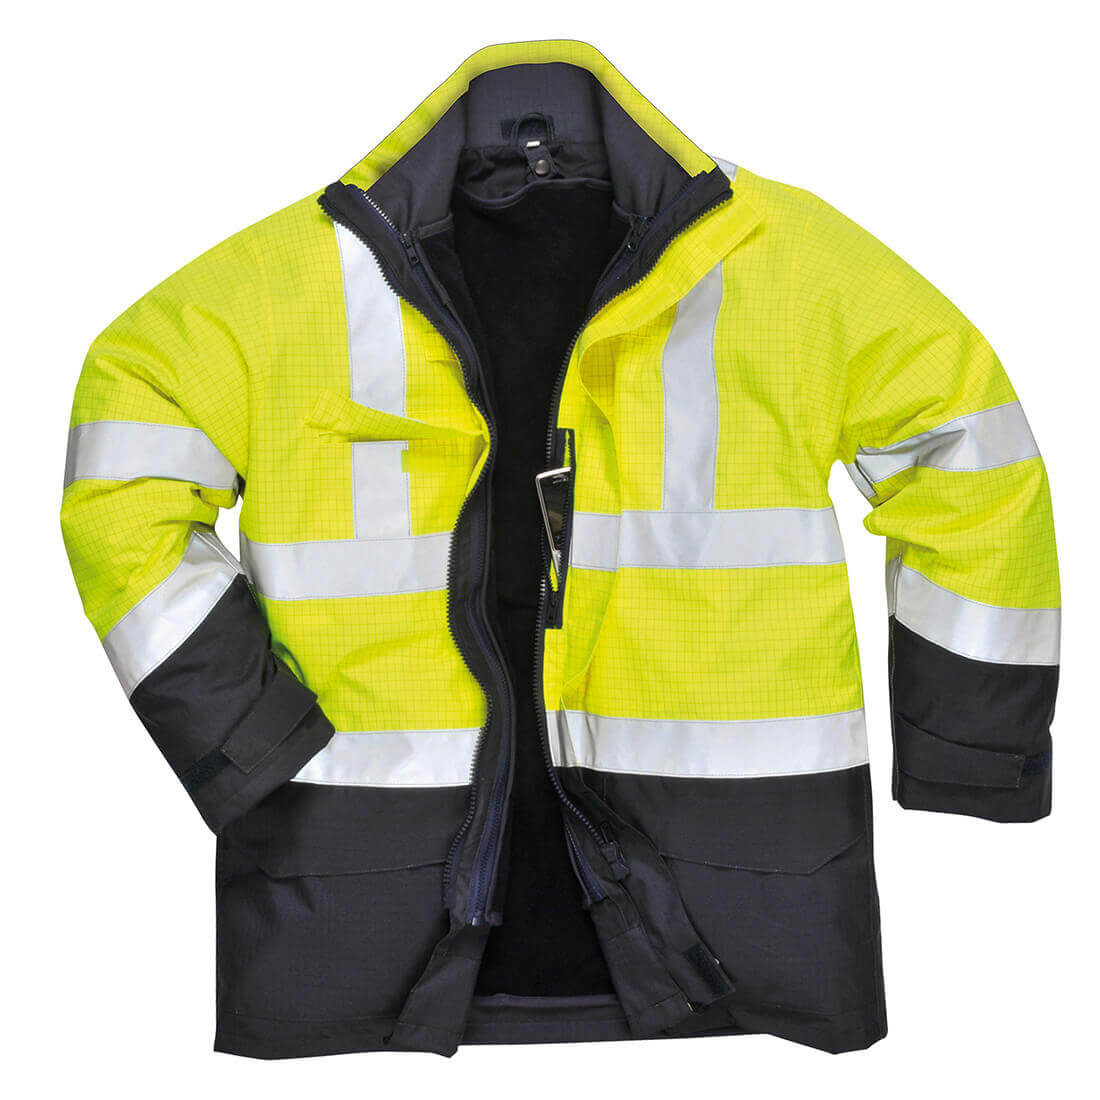 Image of Biz Flame Hi Vis Flame Resistant Rain Multi Protection Jacket Yellow / Navy 2XL